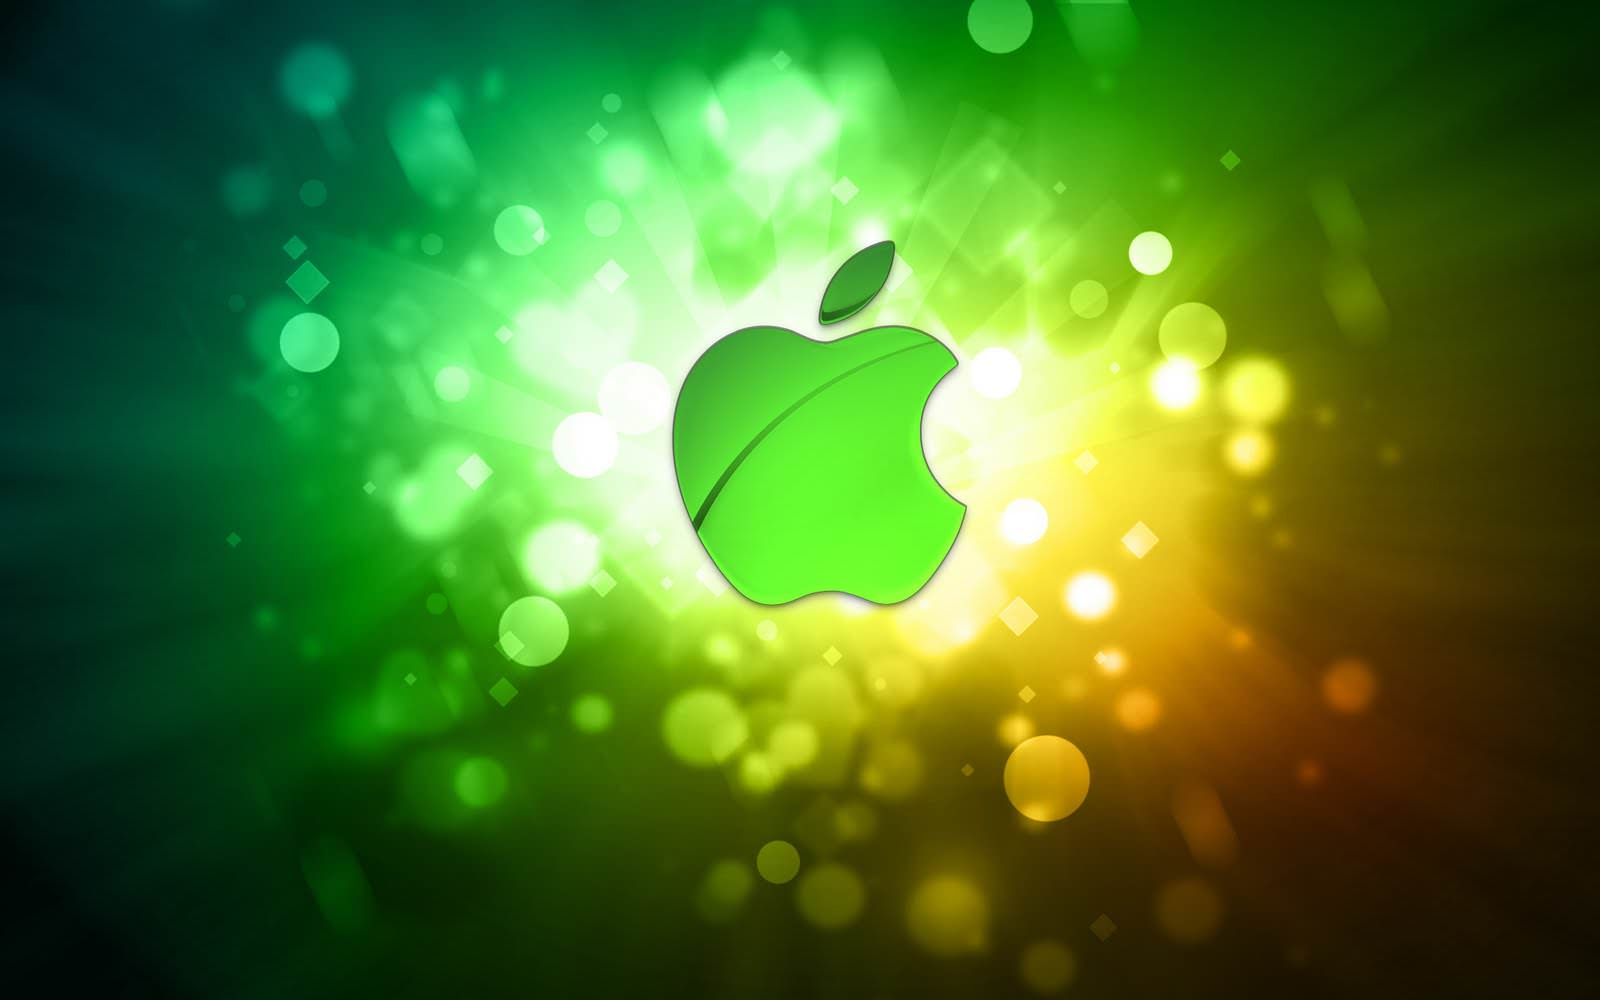 Green Apple Wallpapers 1080p - HD Wallpapers Inx